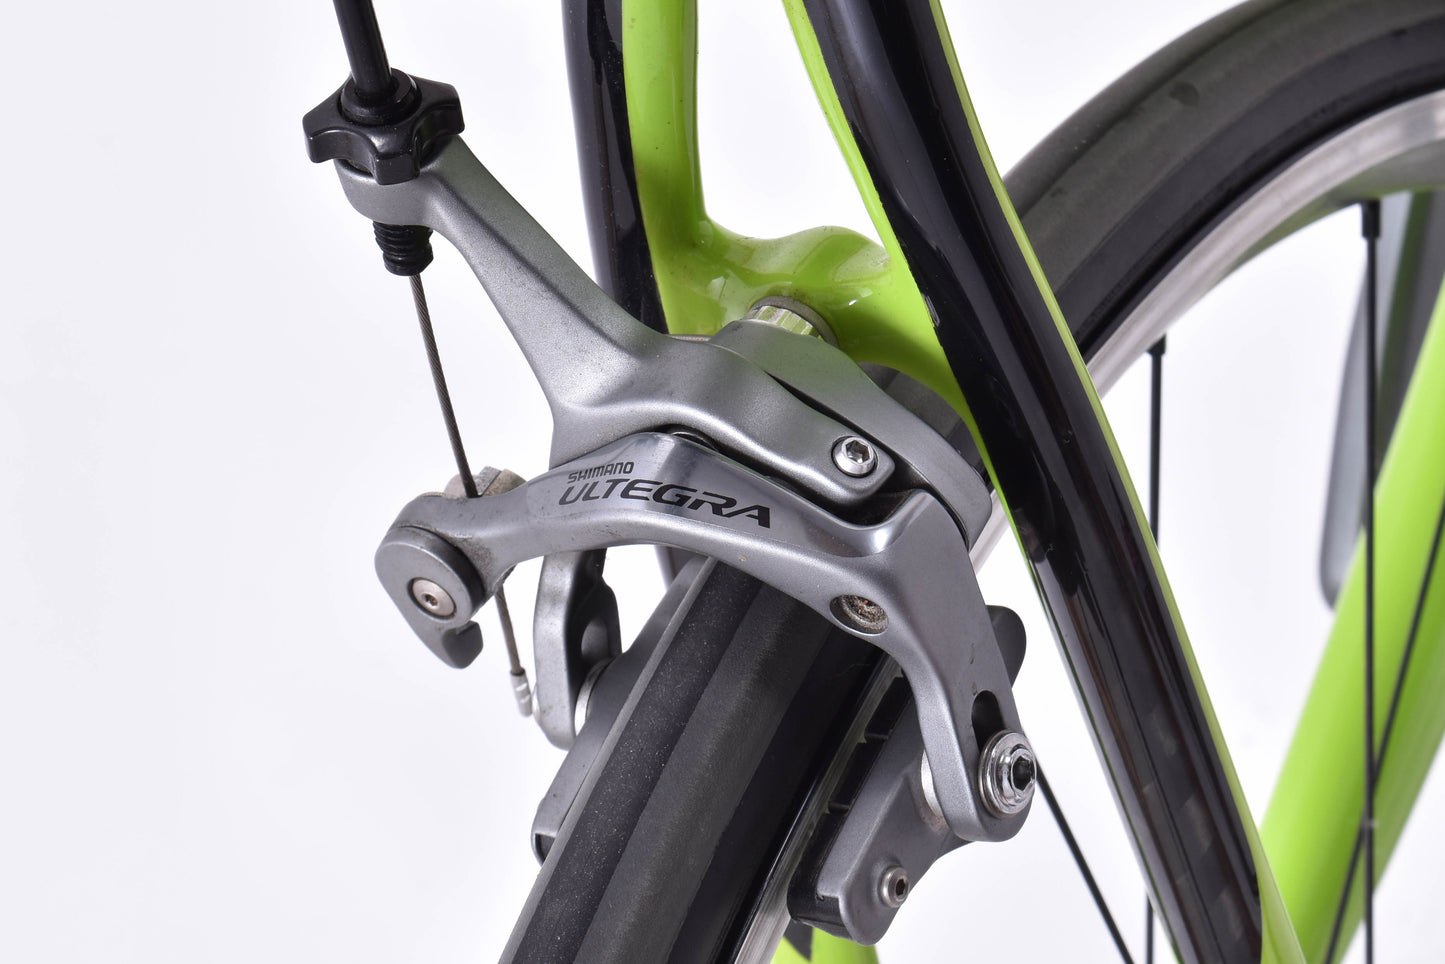 USED Specialized S-Works Amira Carbon Road Bike 51cm Ultegra 6700 2x10